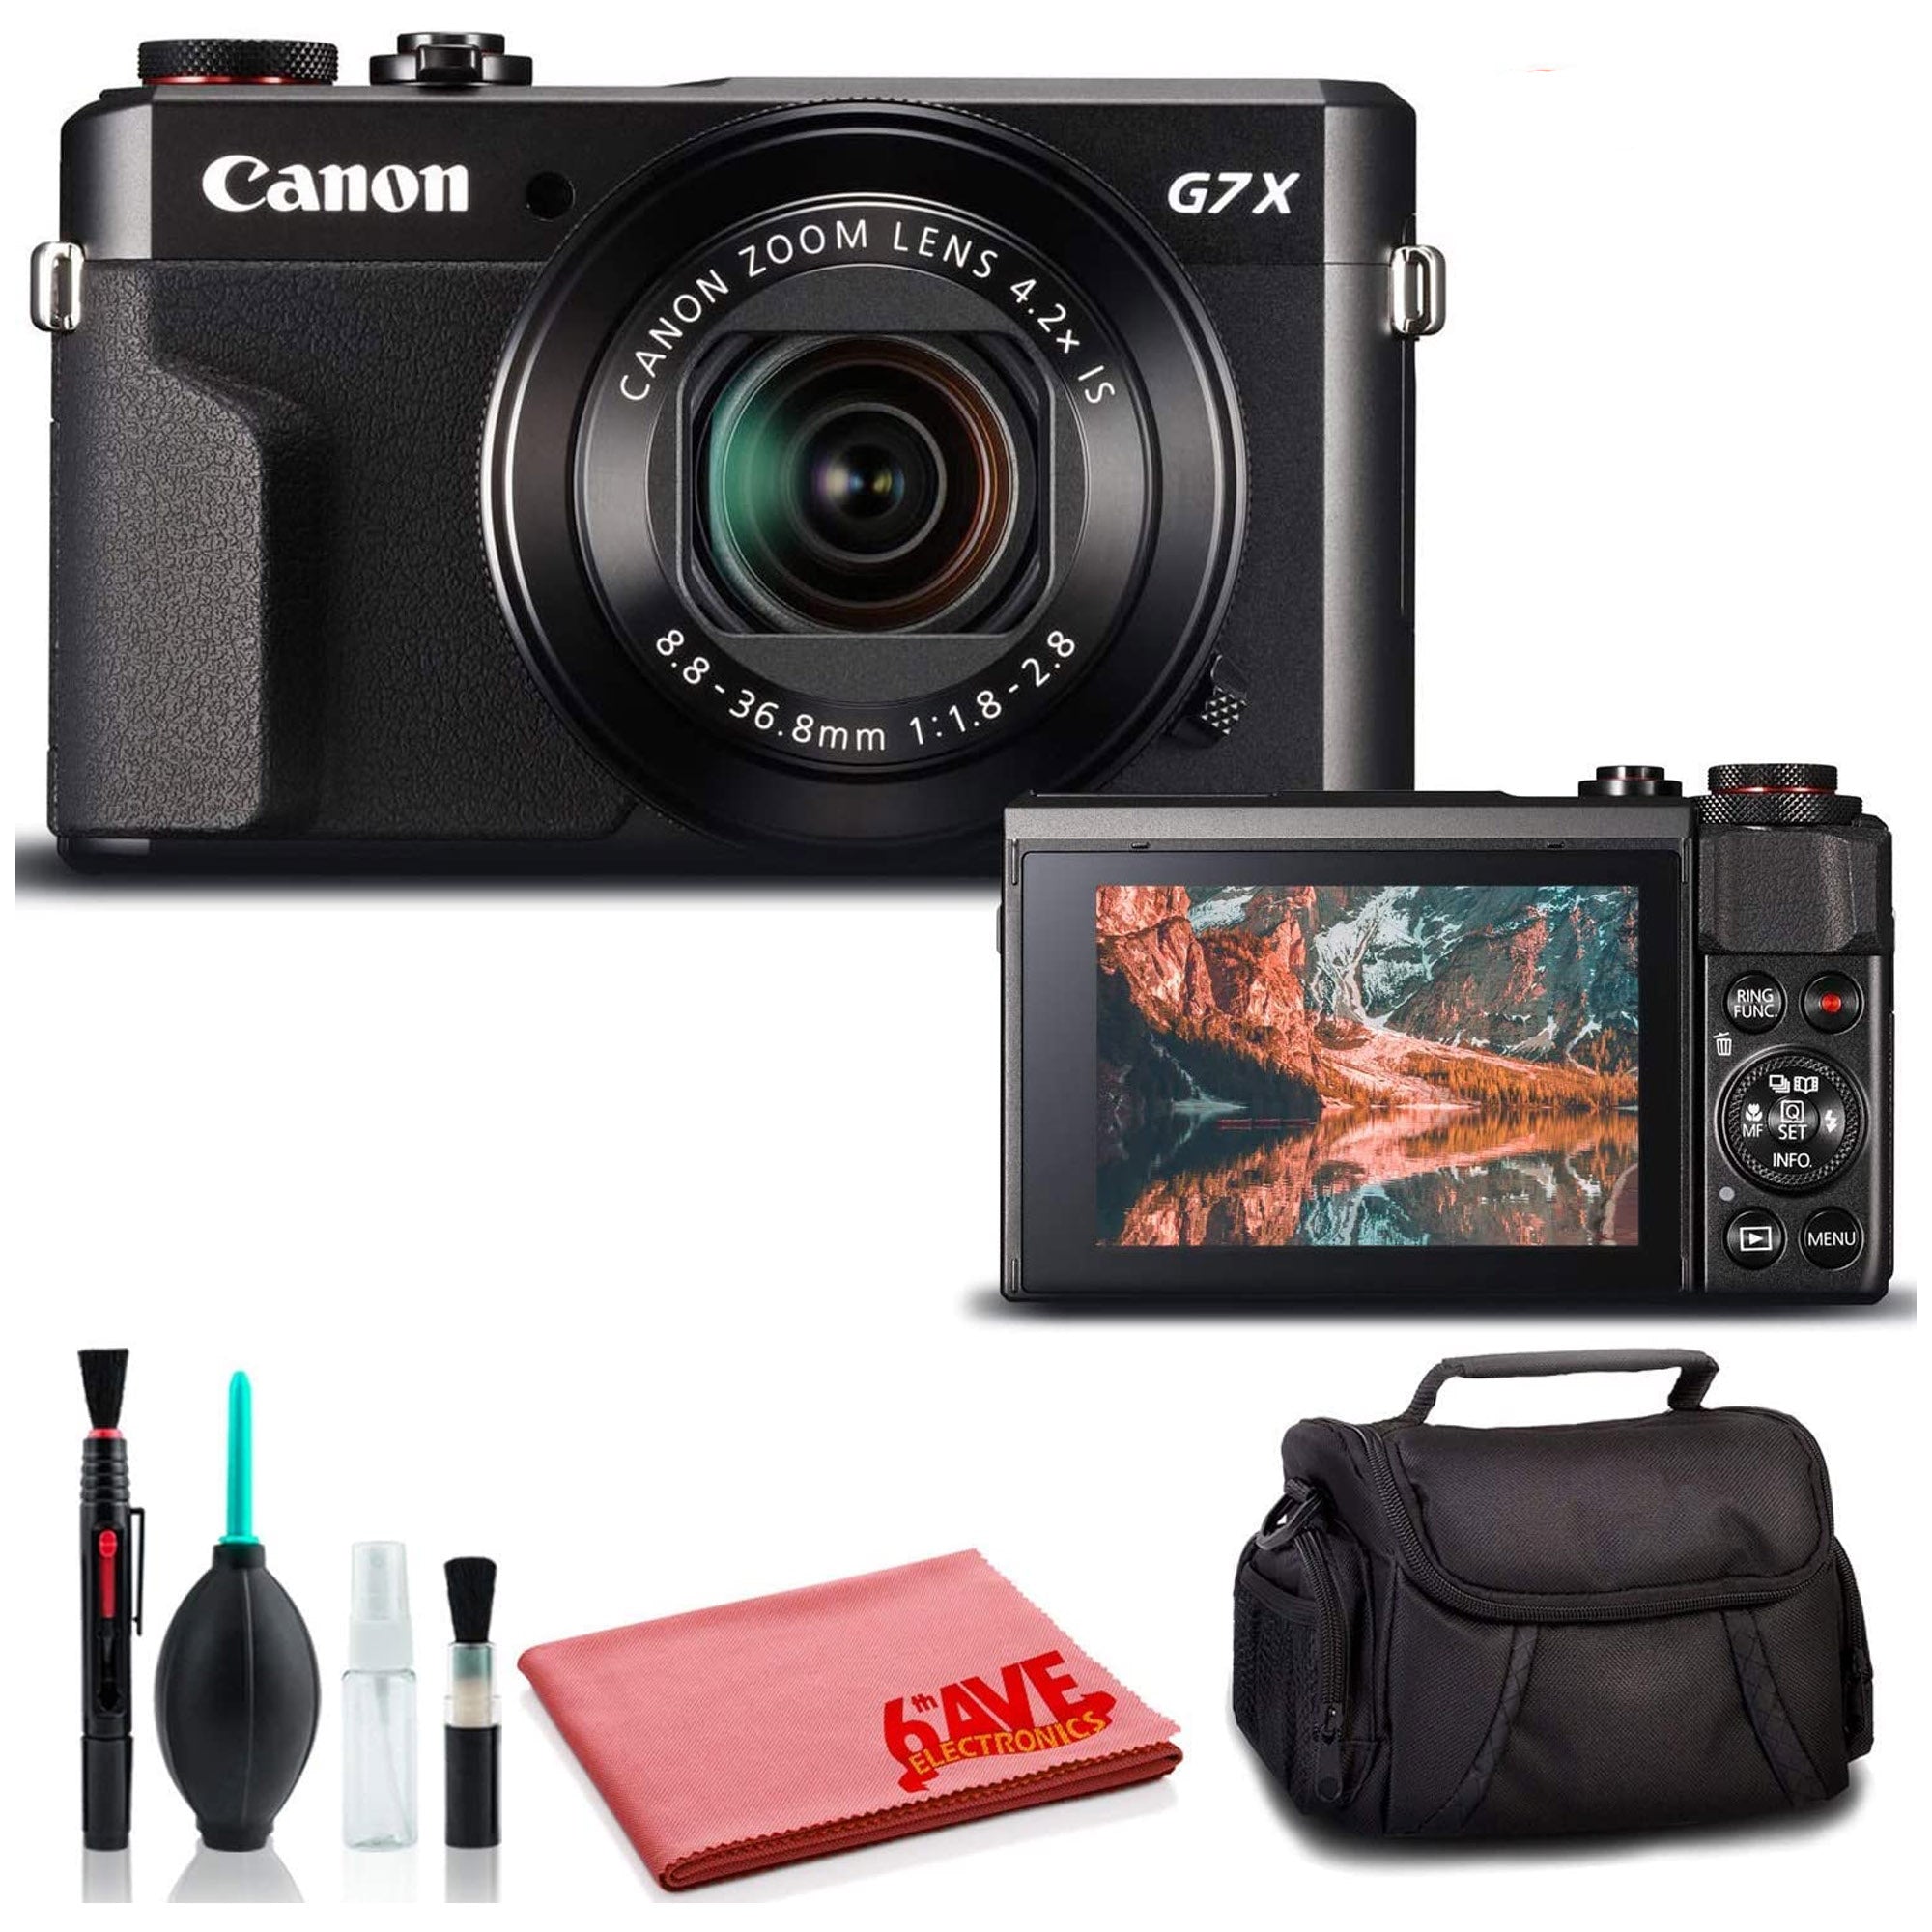 Canon PowerShot G7 X Mark II Digital Camera (International Model) - Deluxe Kit